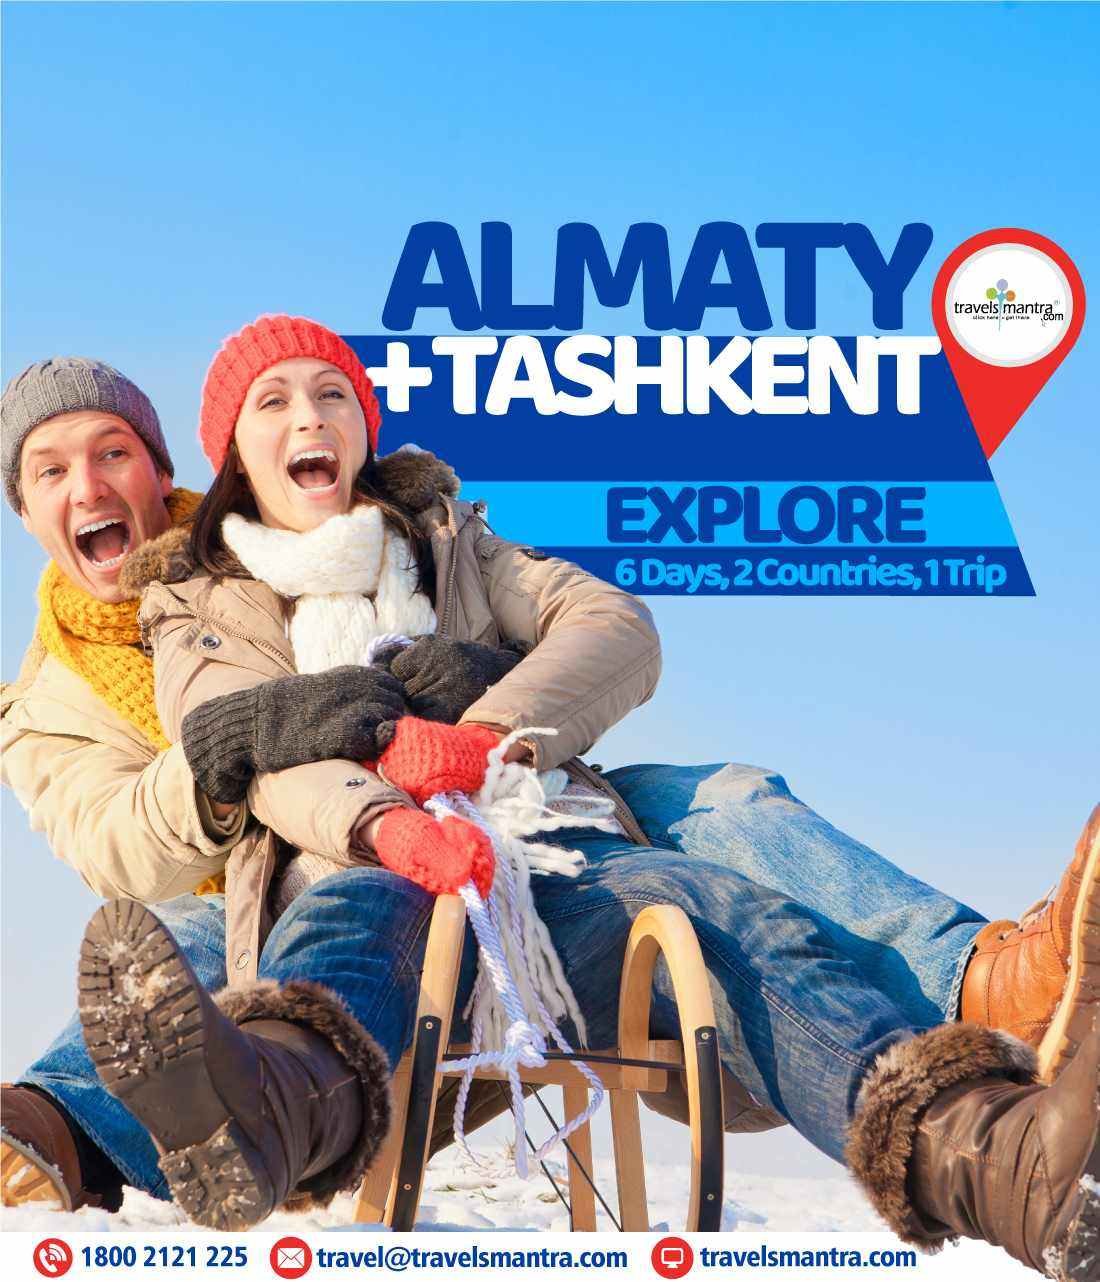 almaty-tashkent-website-slider_Web